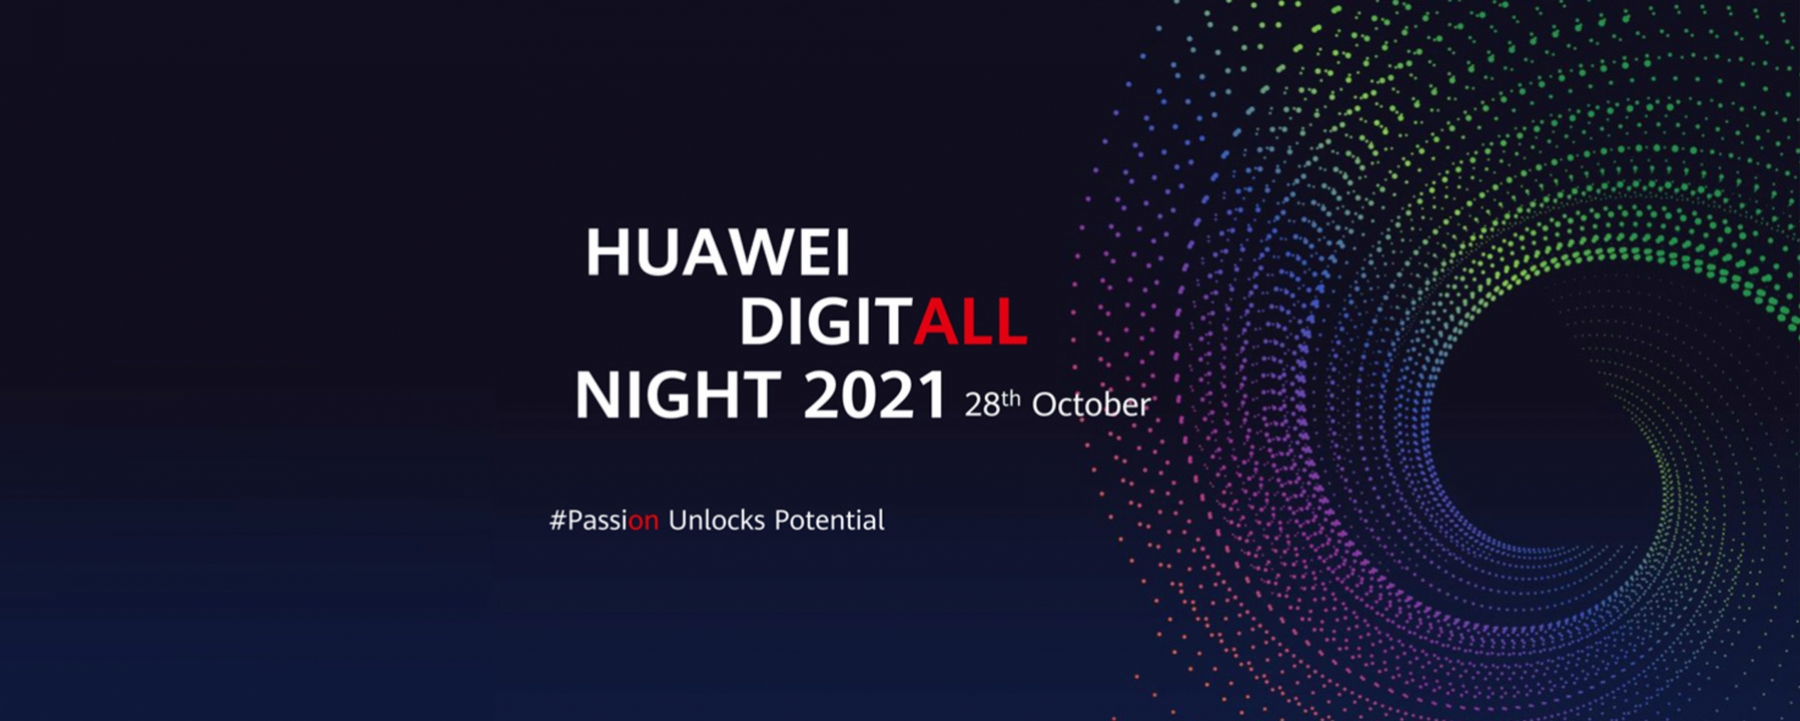 Huawei Digitall Night 2021